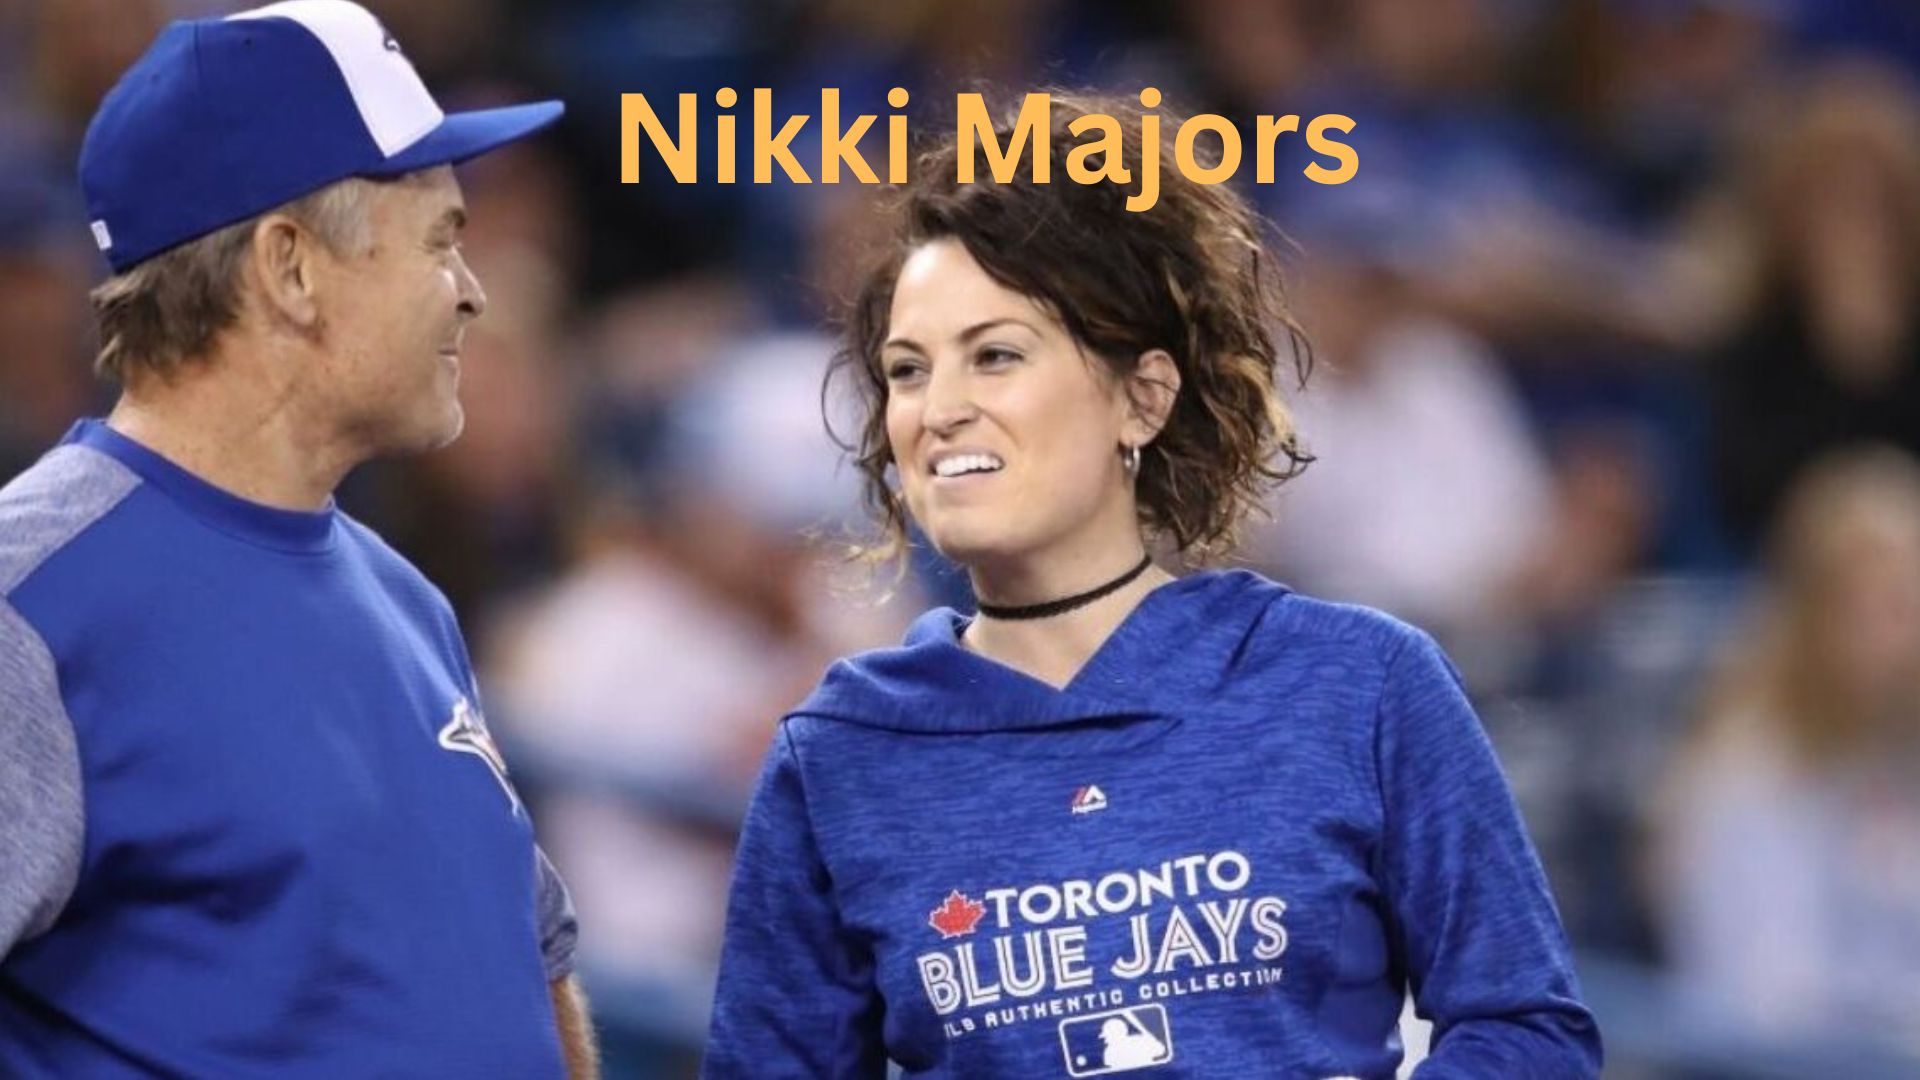 Nikki Majors